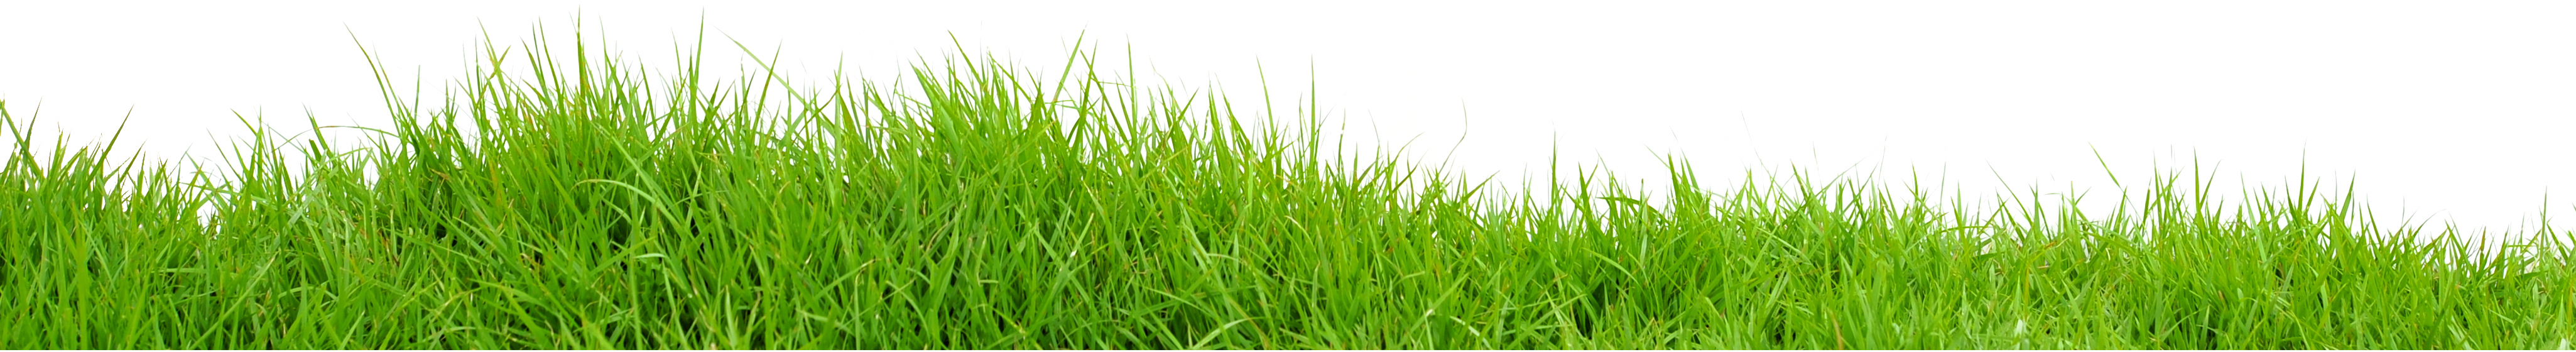 Grünes Gras-PNG-Bild